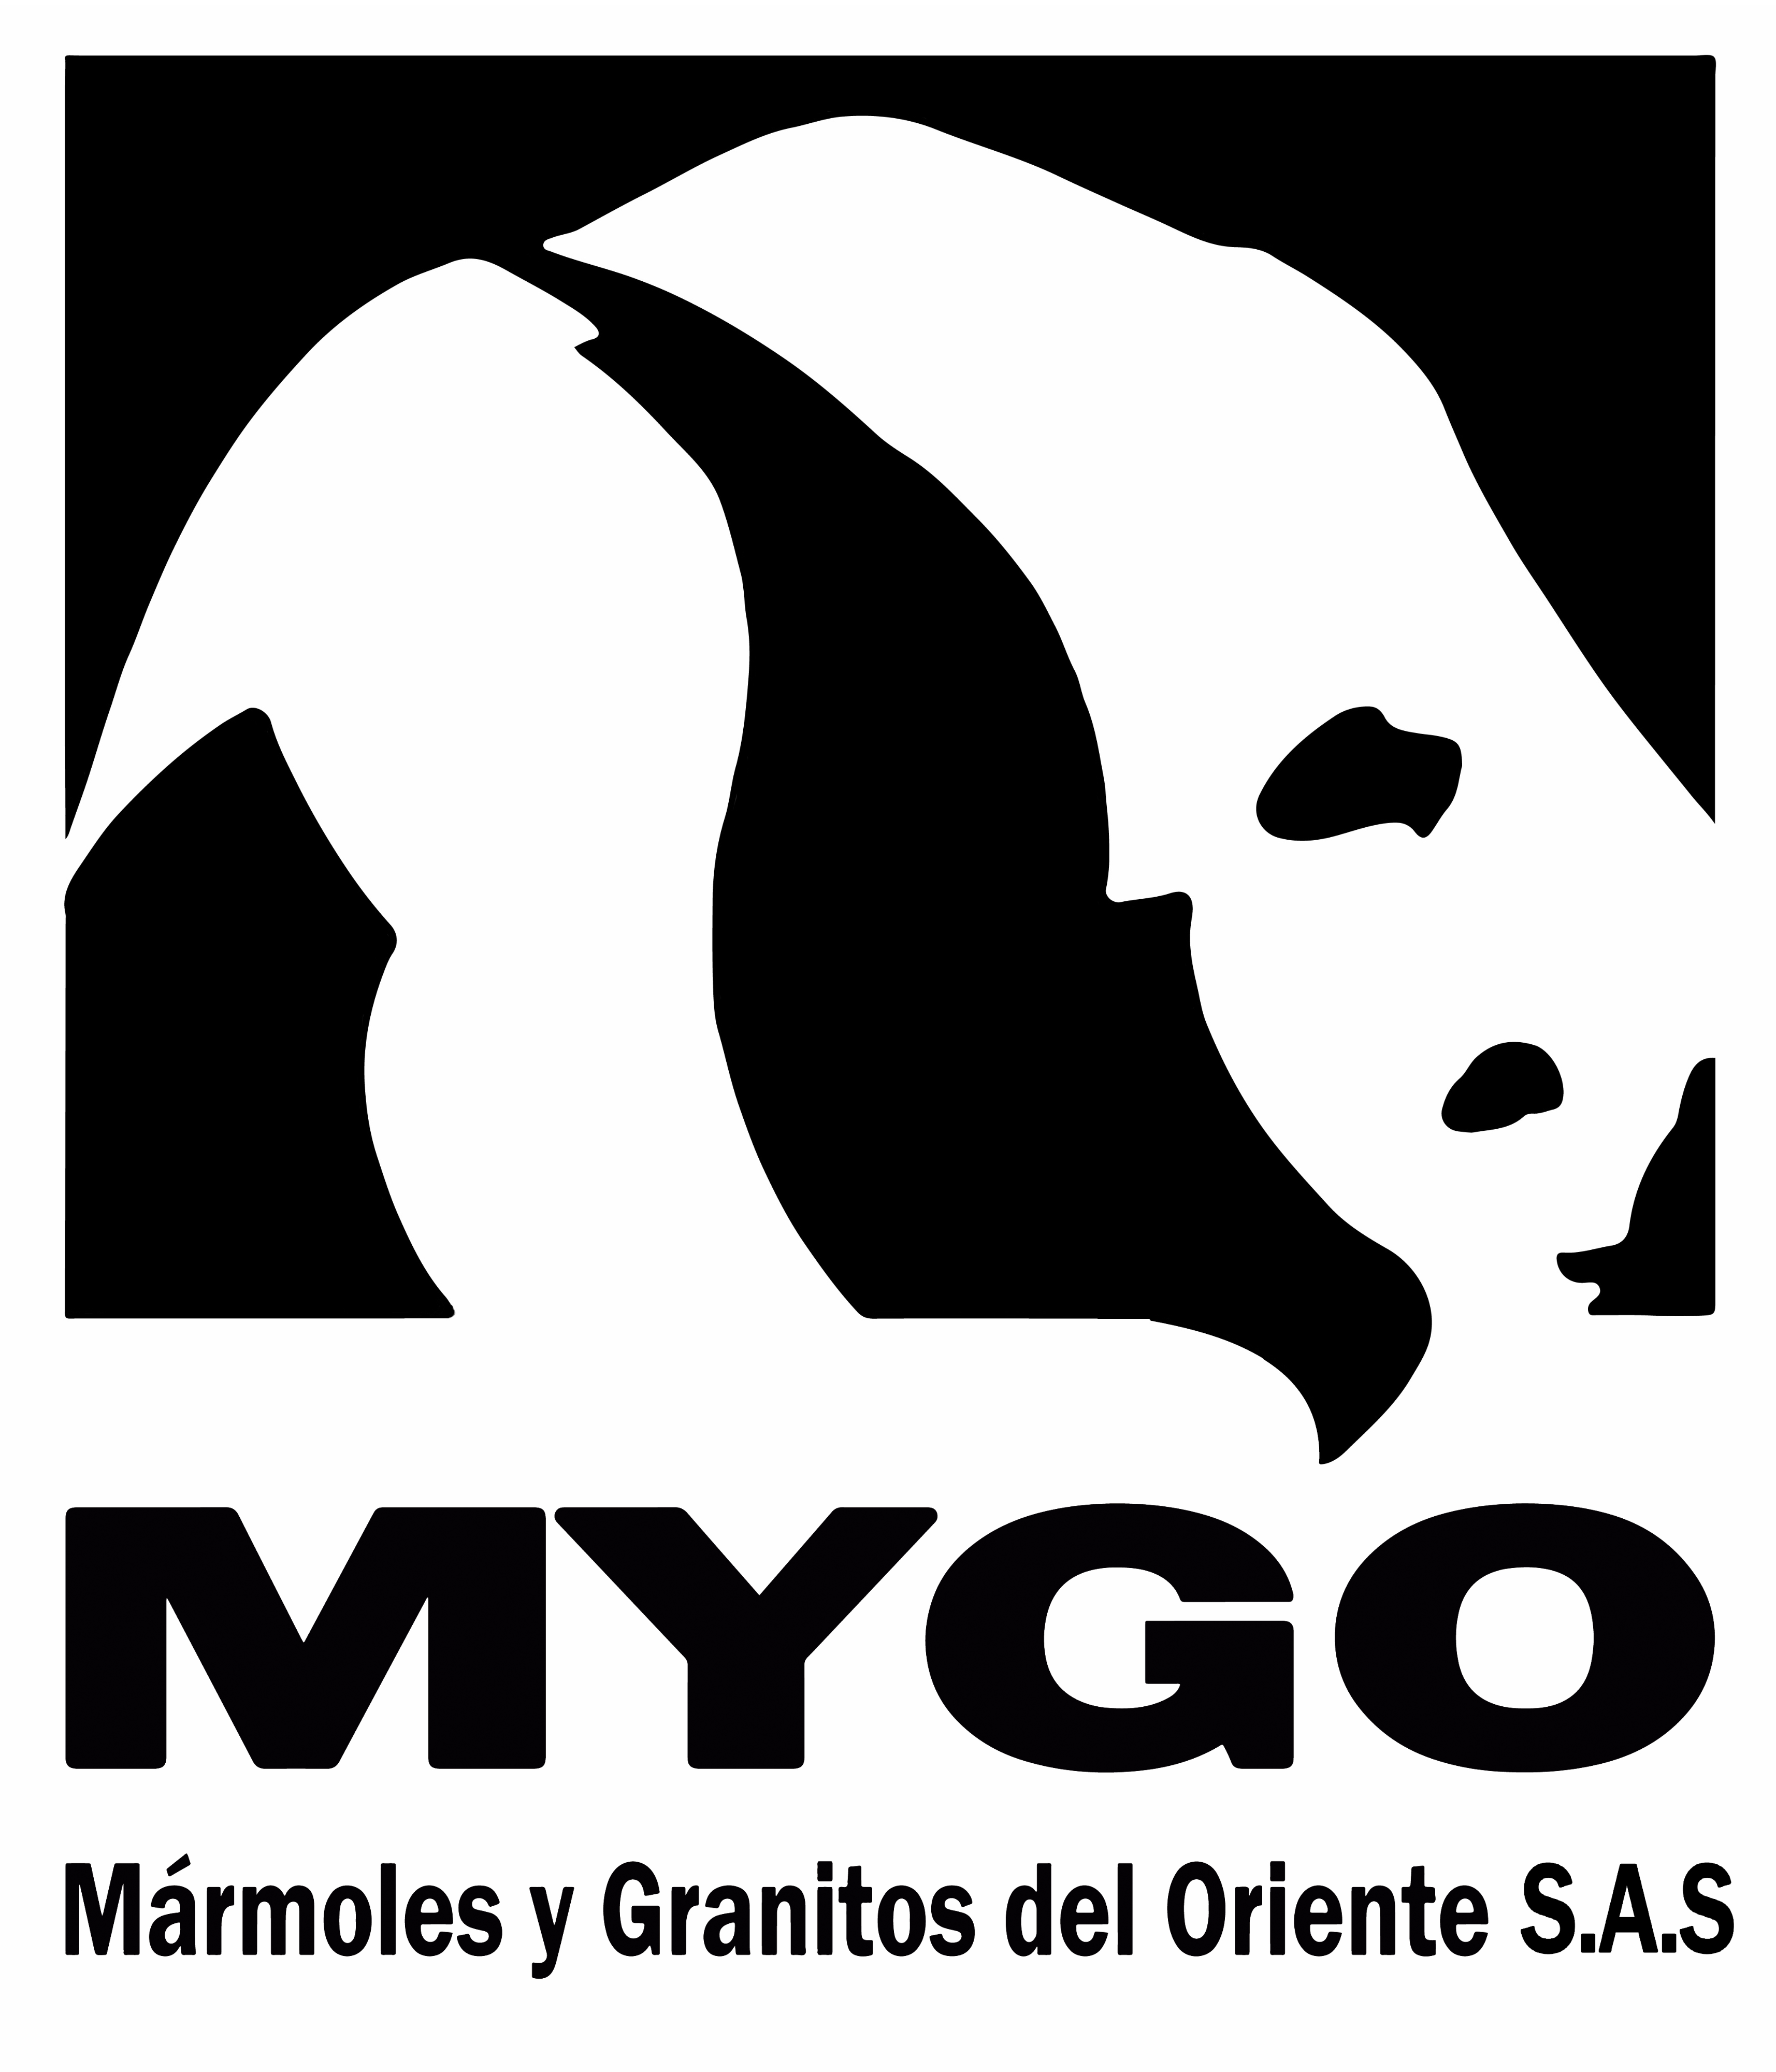 MYGO